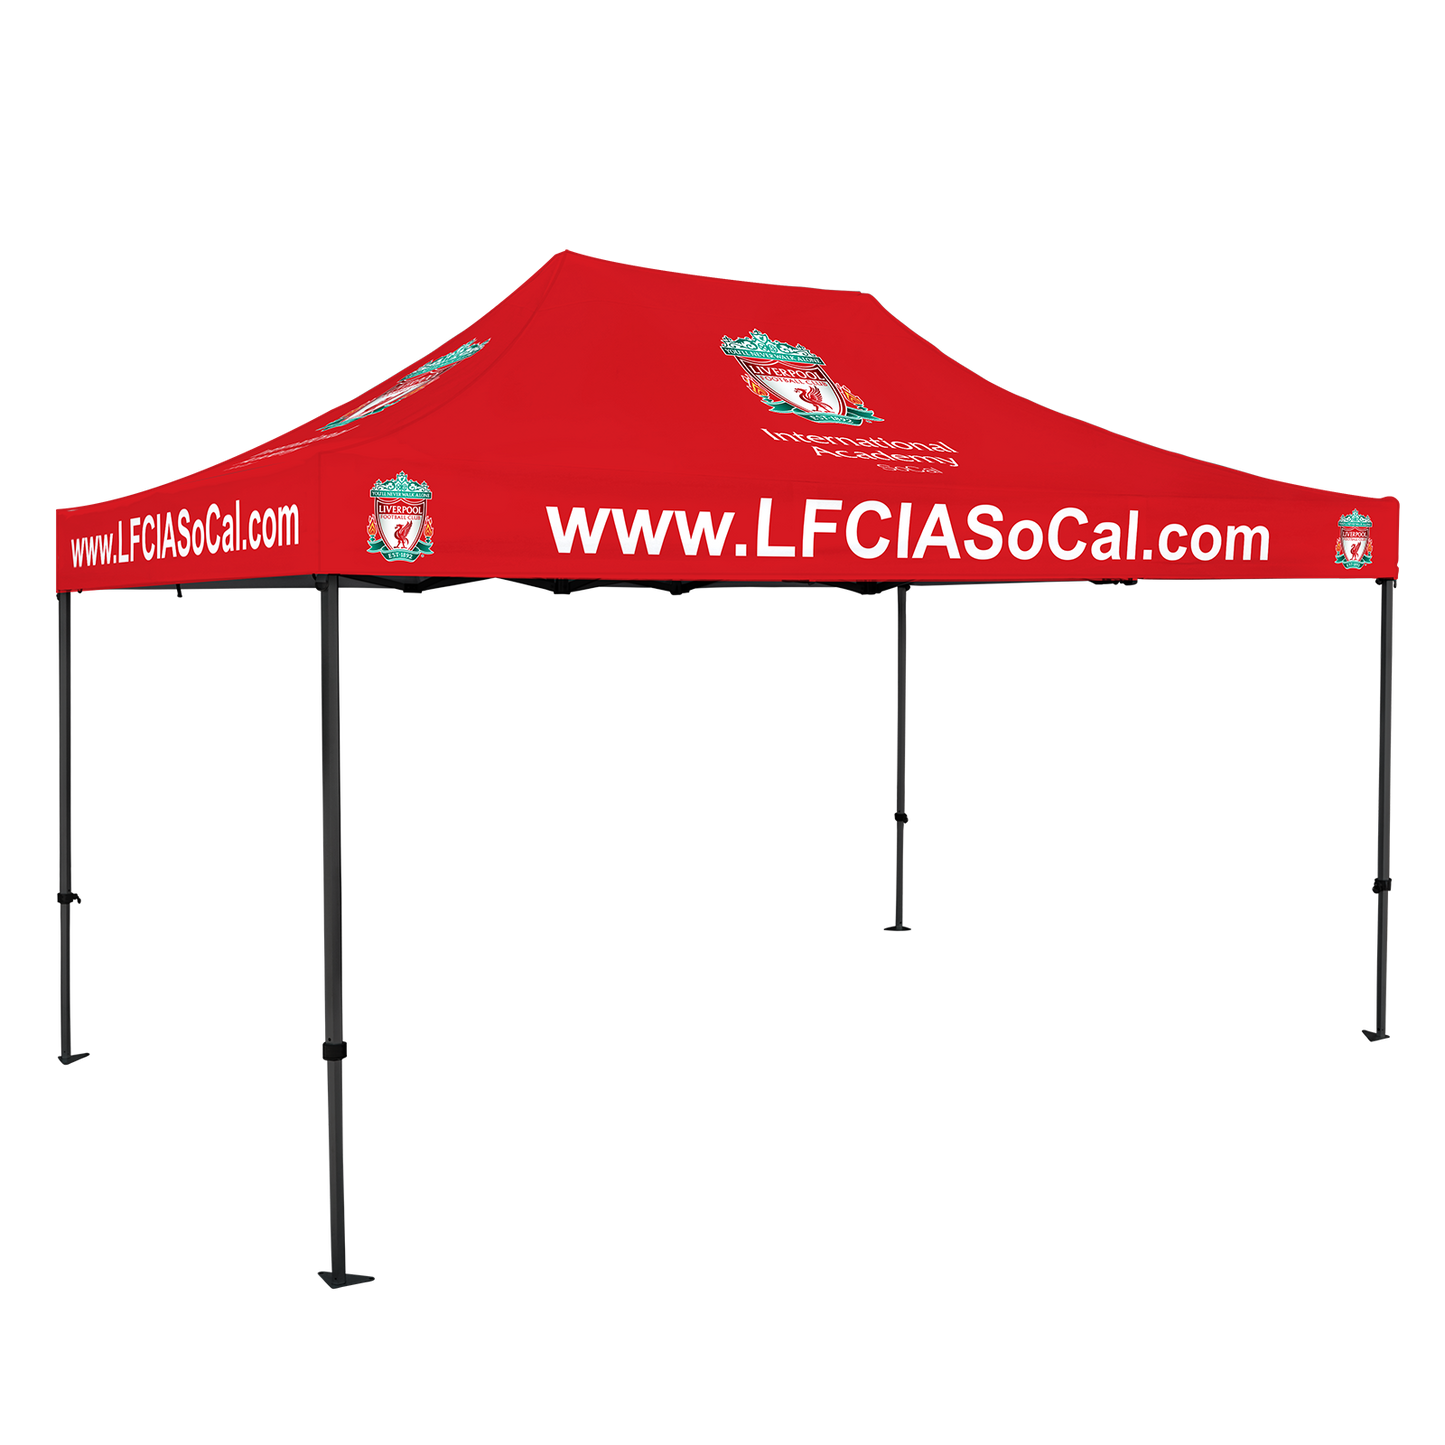 Liverpool FC IA SoCal 10x15 Canopy Kit